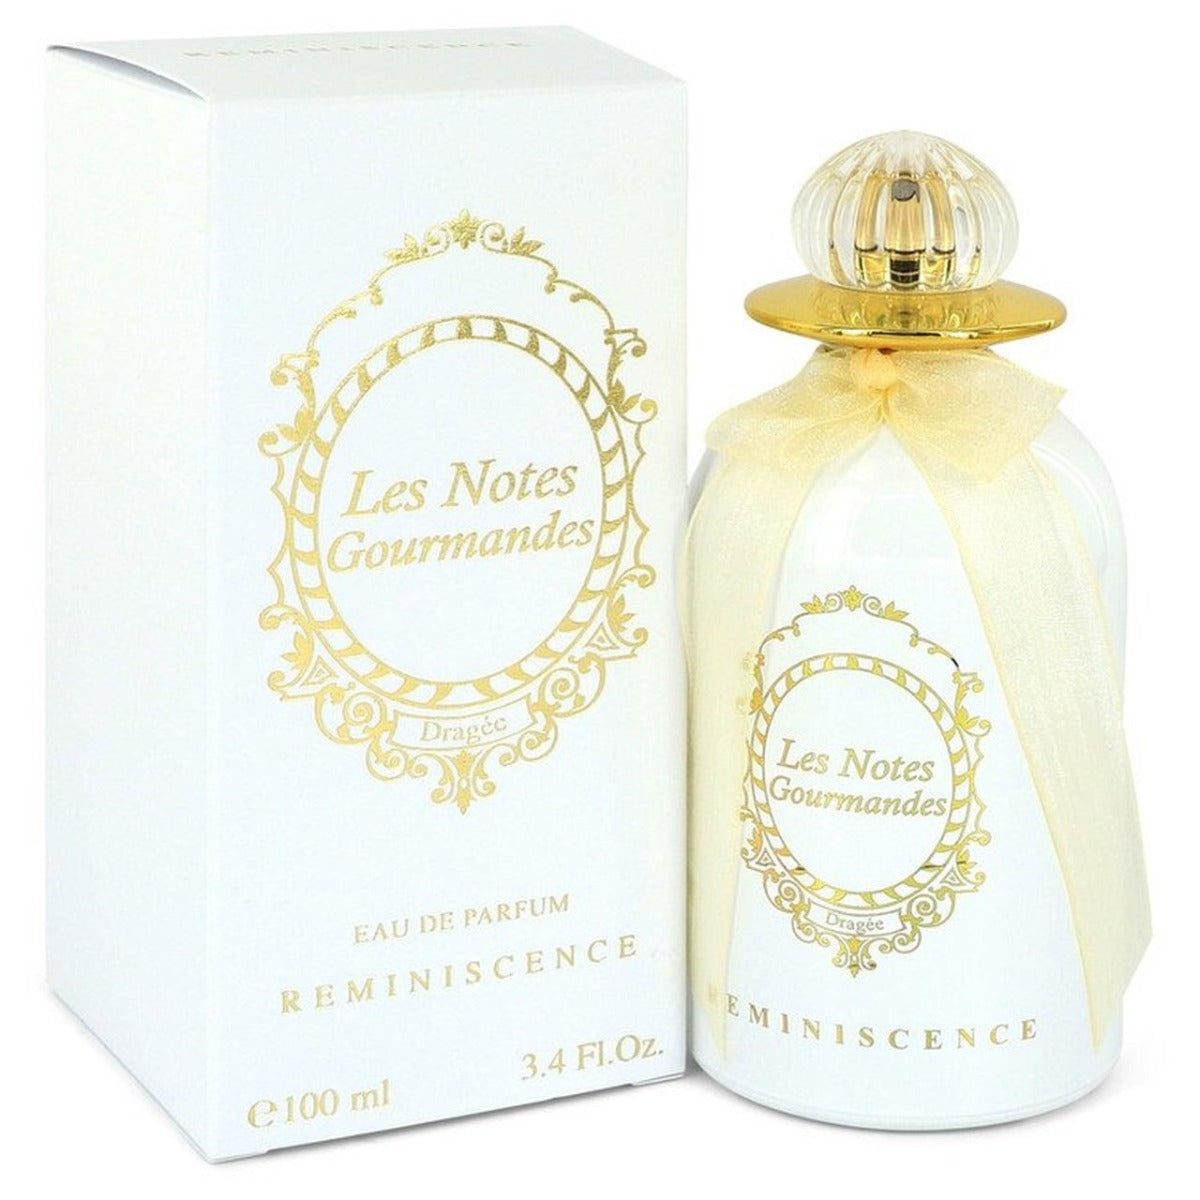 Vanille Reminiscence perfume - a fragrance for women 2012